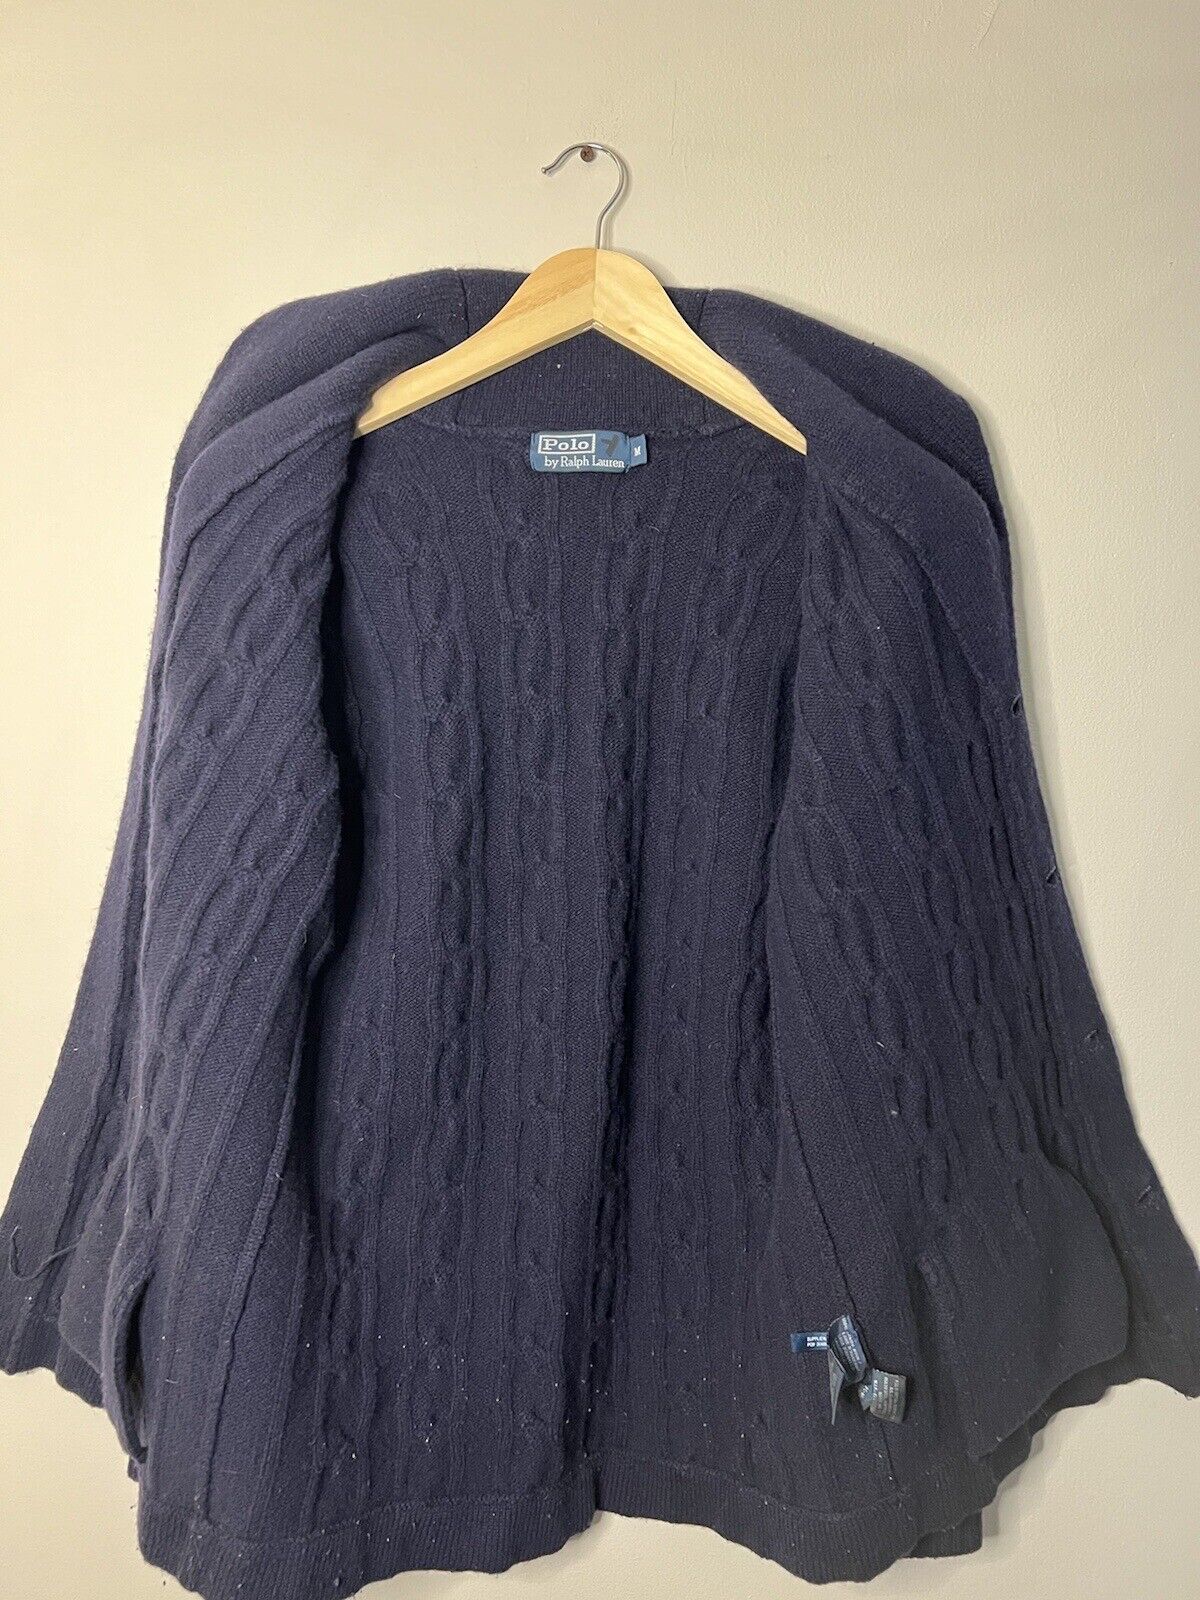 Polo Ralph Lauren Cable Knit Cardigan Sweater Sz M - image 3